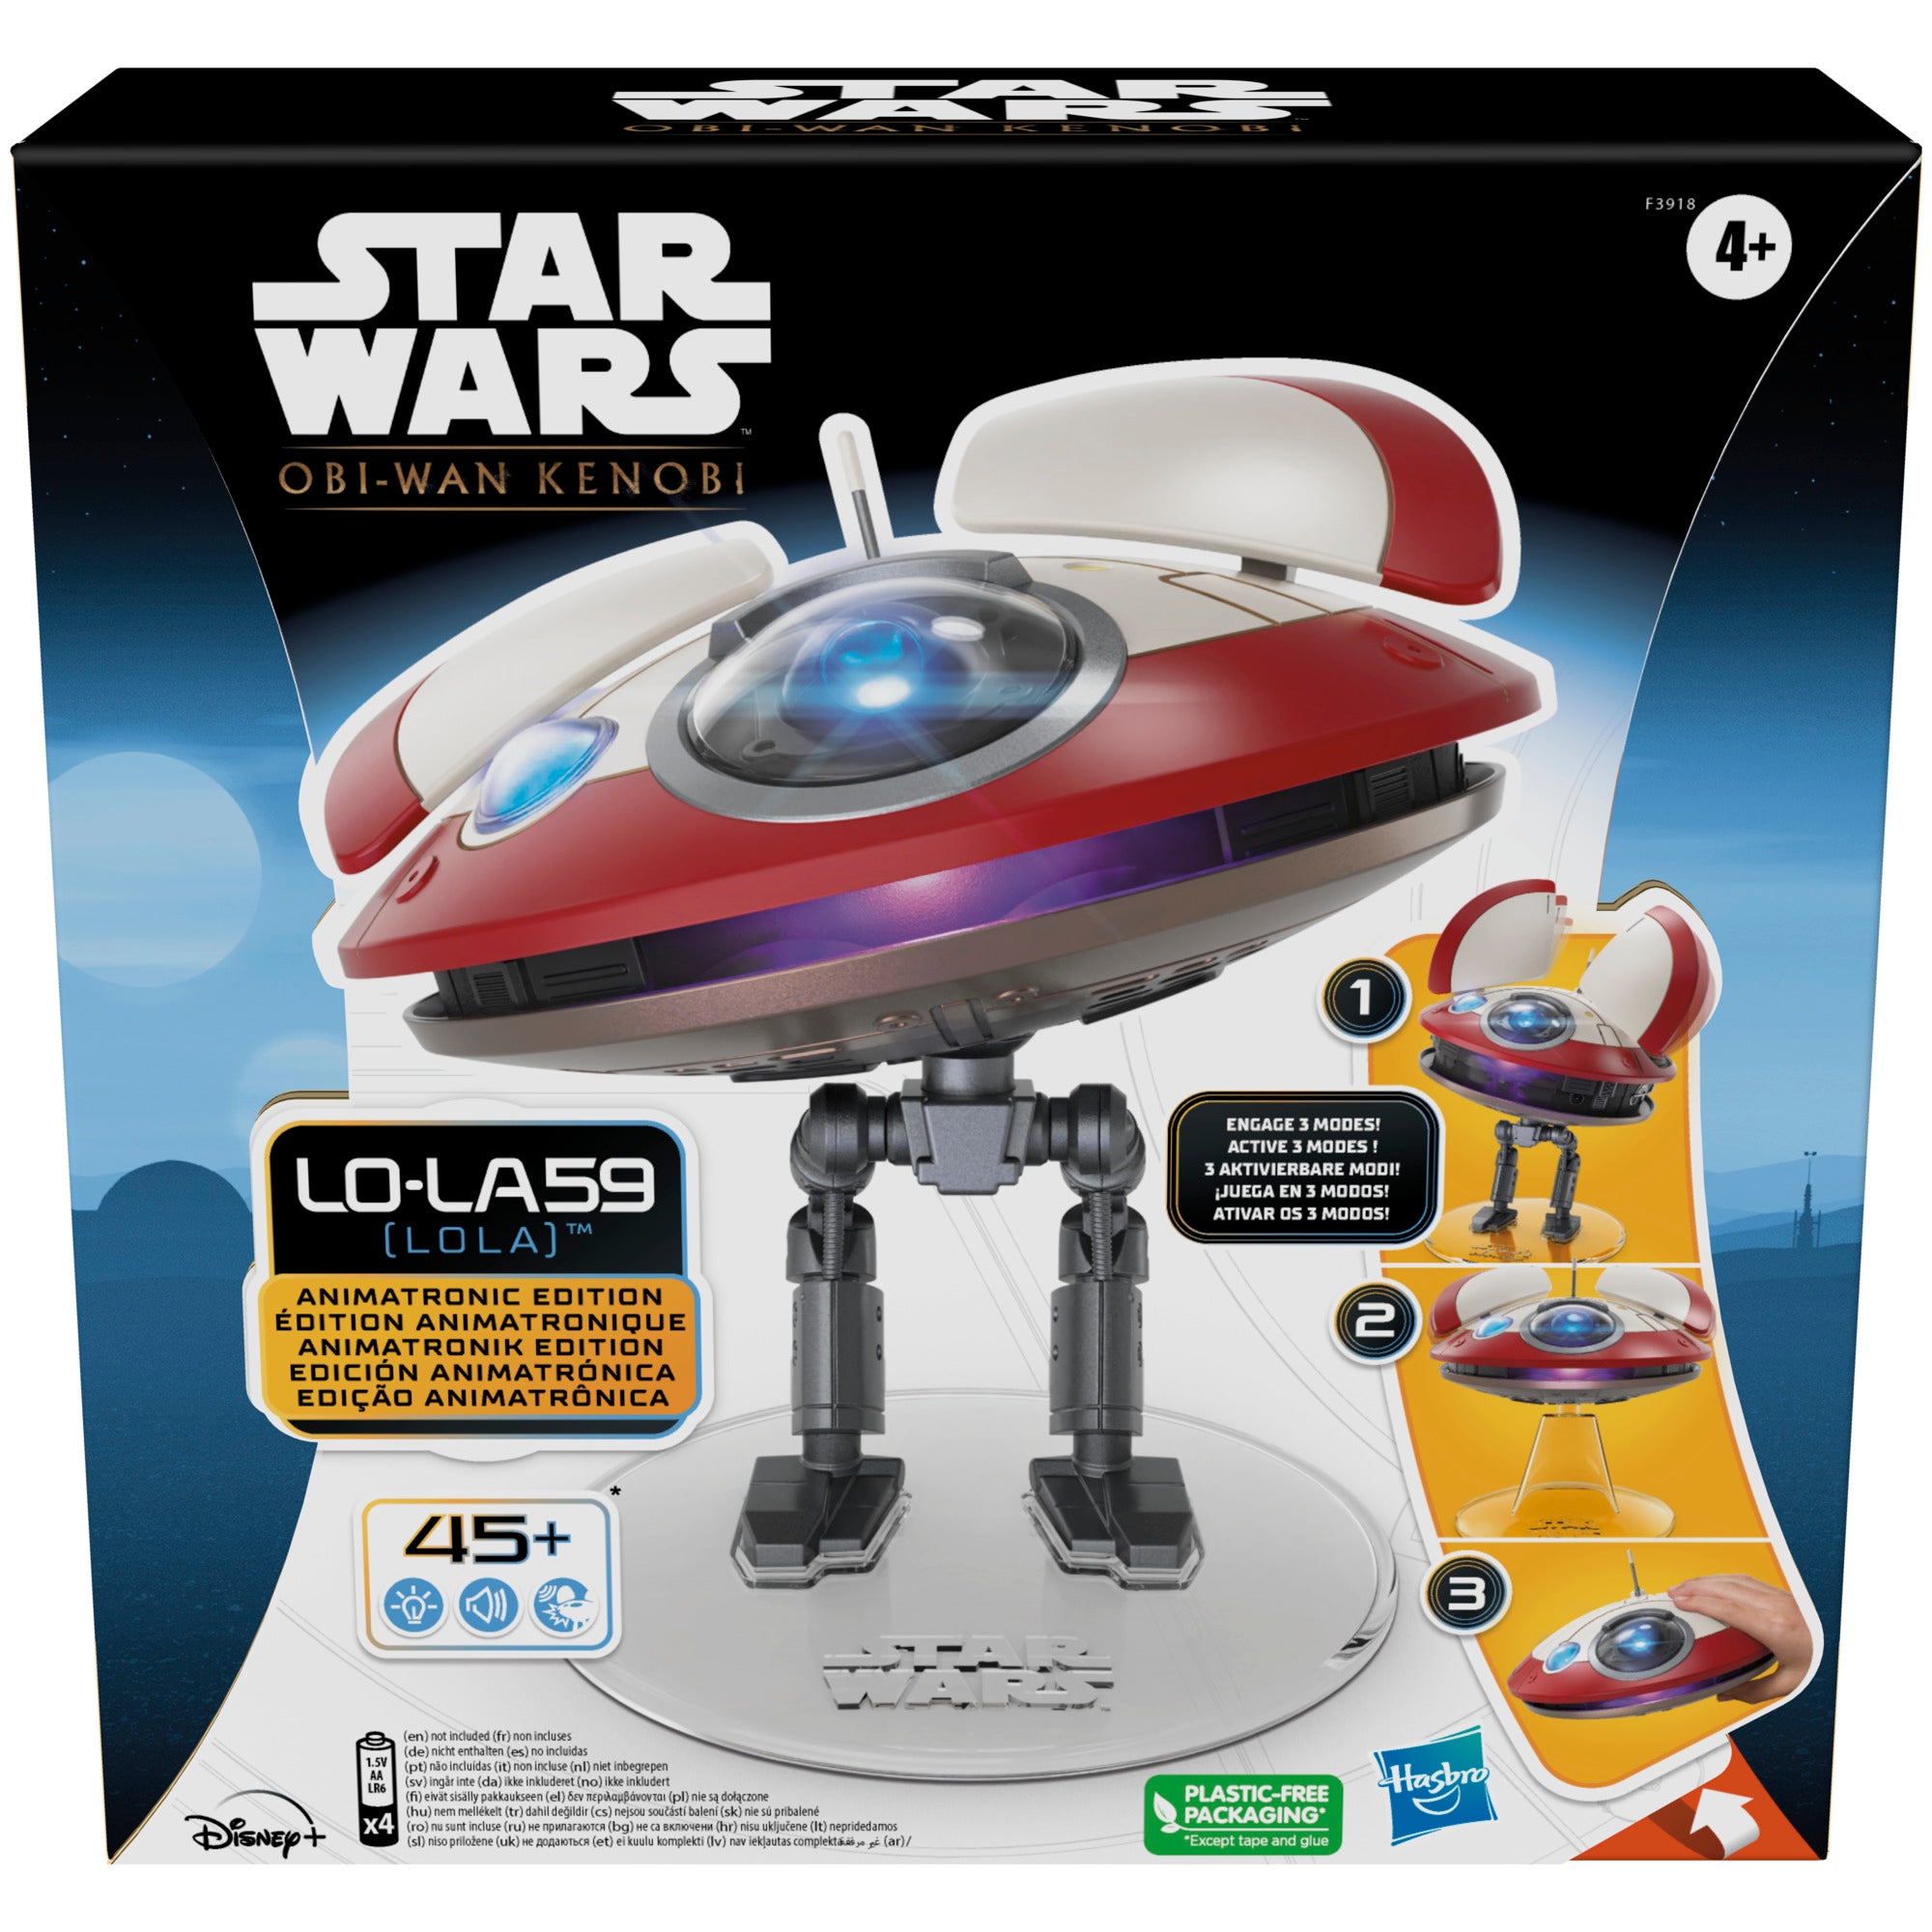 Obi-Wan Kenobi LL-LA59 (Lola) Animatronic Edition Droid Toy 1